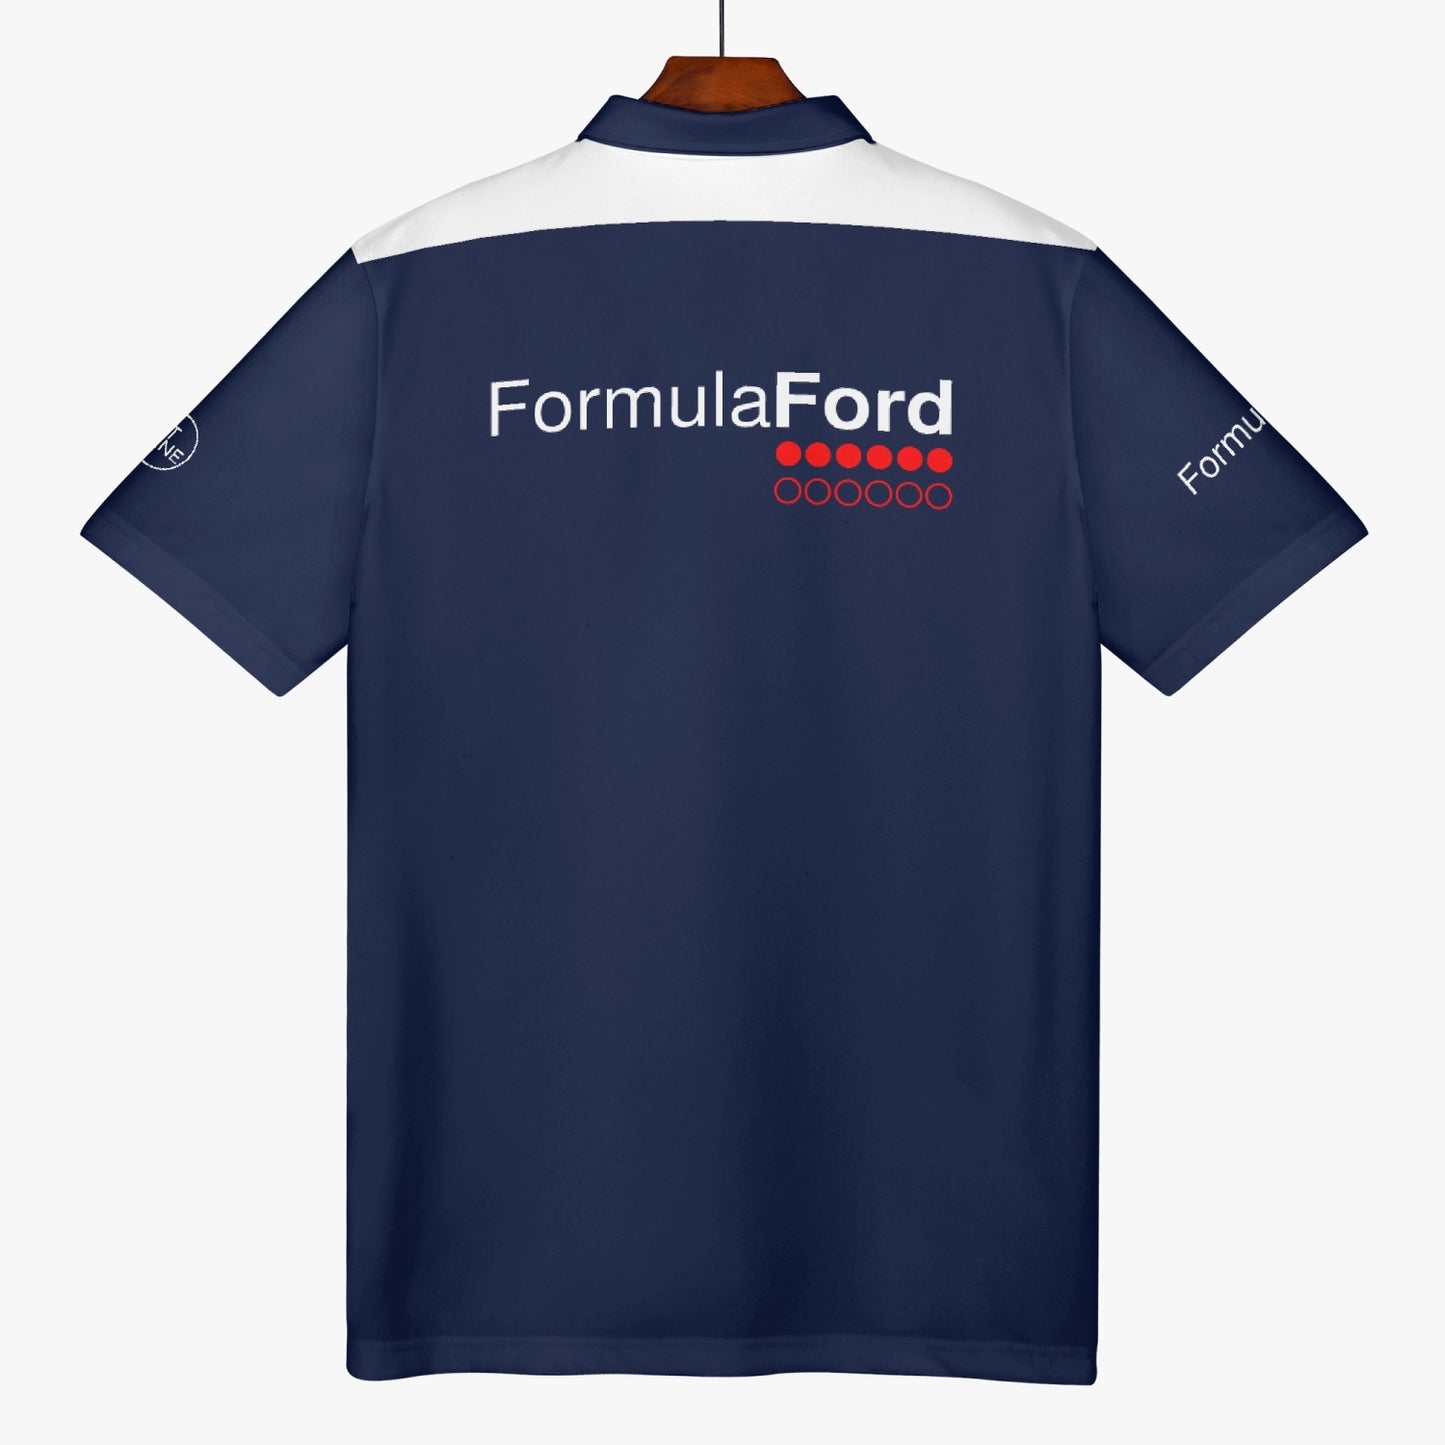 FORMULA FORD Official Handmade Polo Shirt - Navy